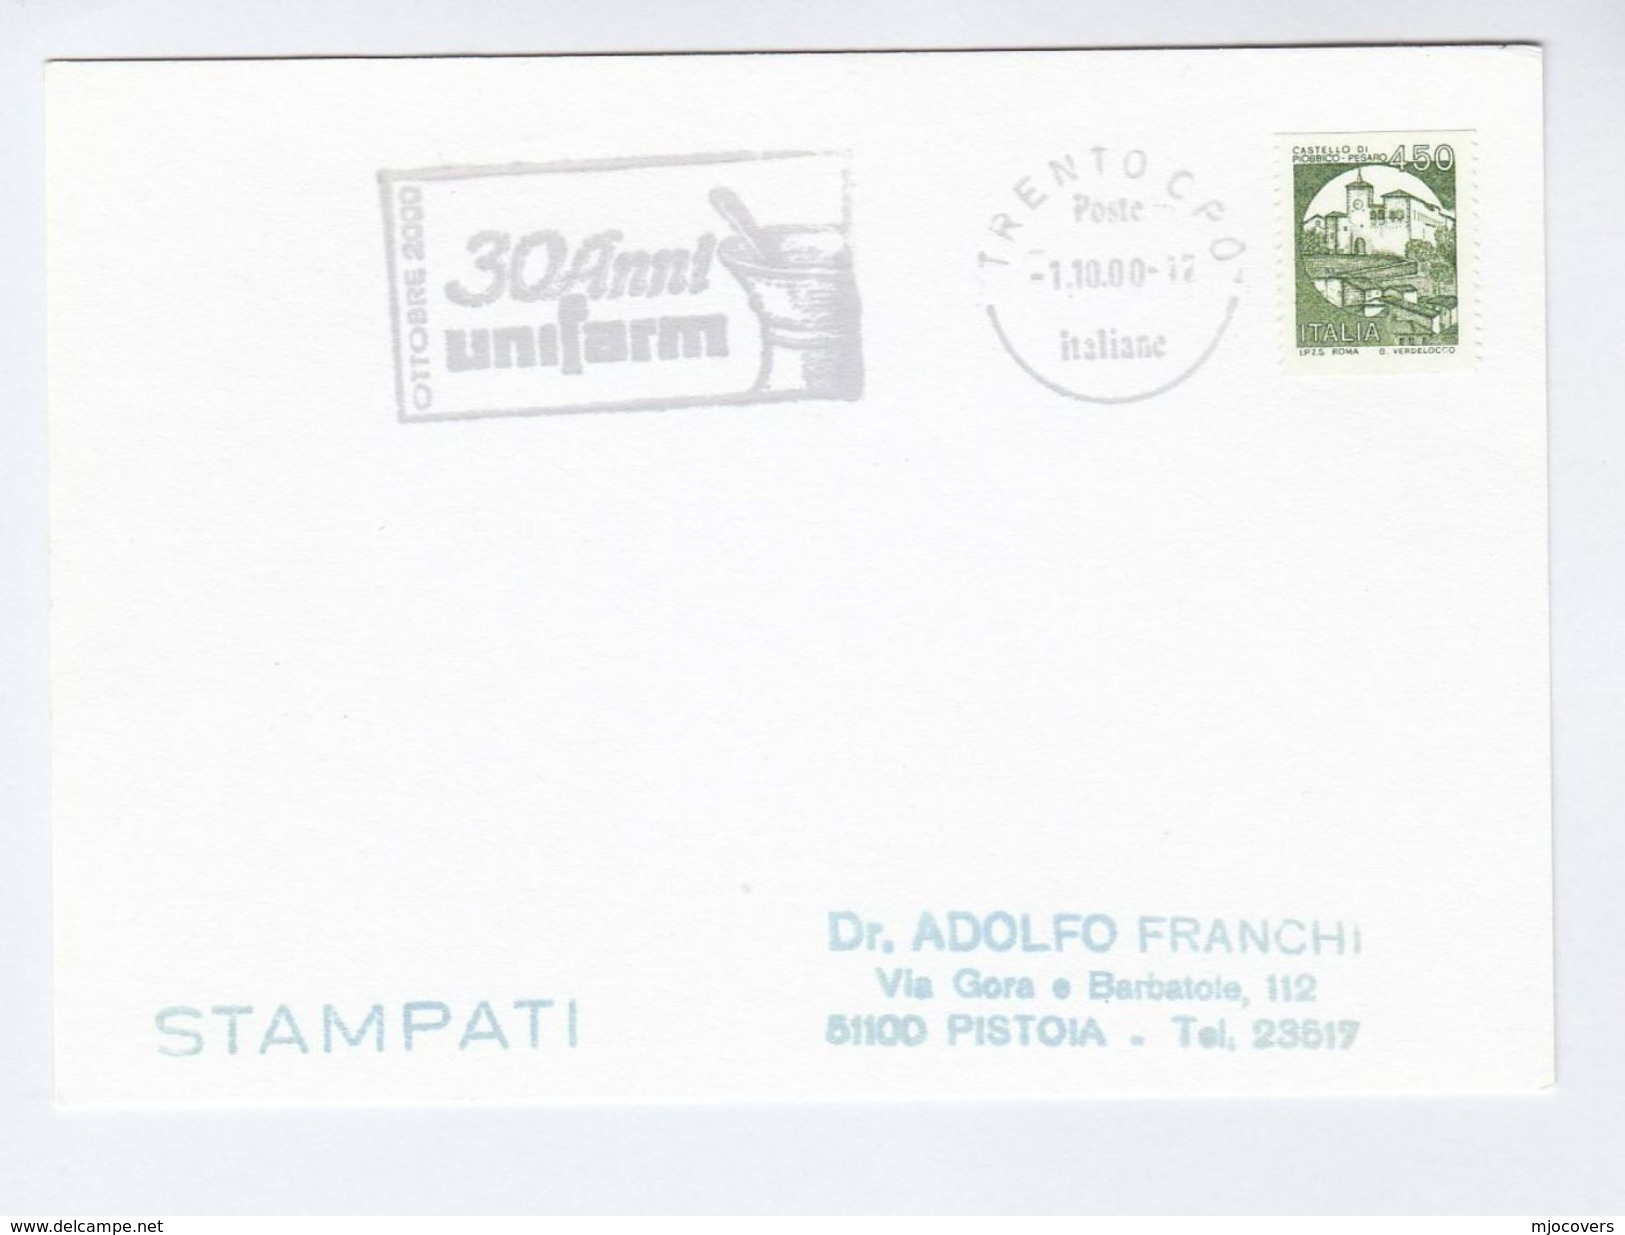 2000 Trento ITALY PHARMACY EVENT COVER  SLOGAN Illus MORTAR PESTLE, UNIFARM 30th ANNIV Medicine Health Stamps - Farmacia